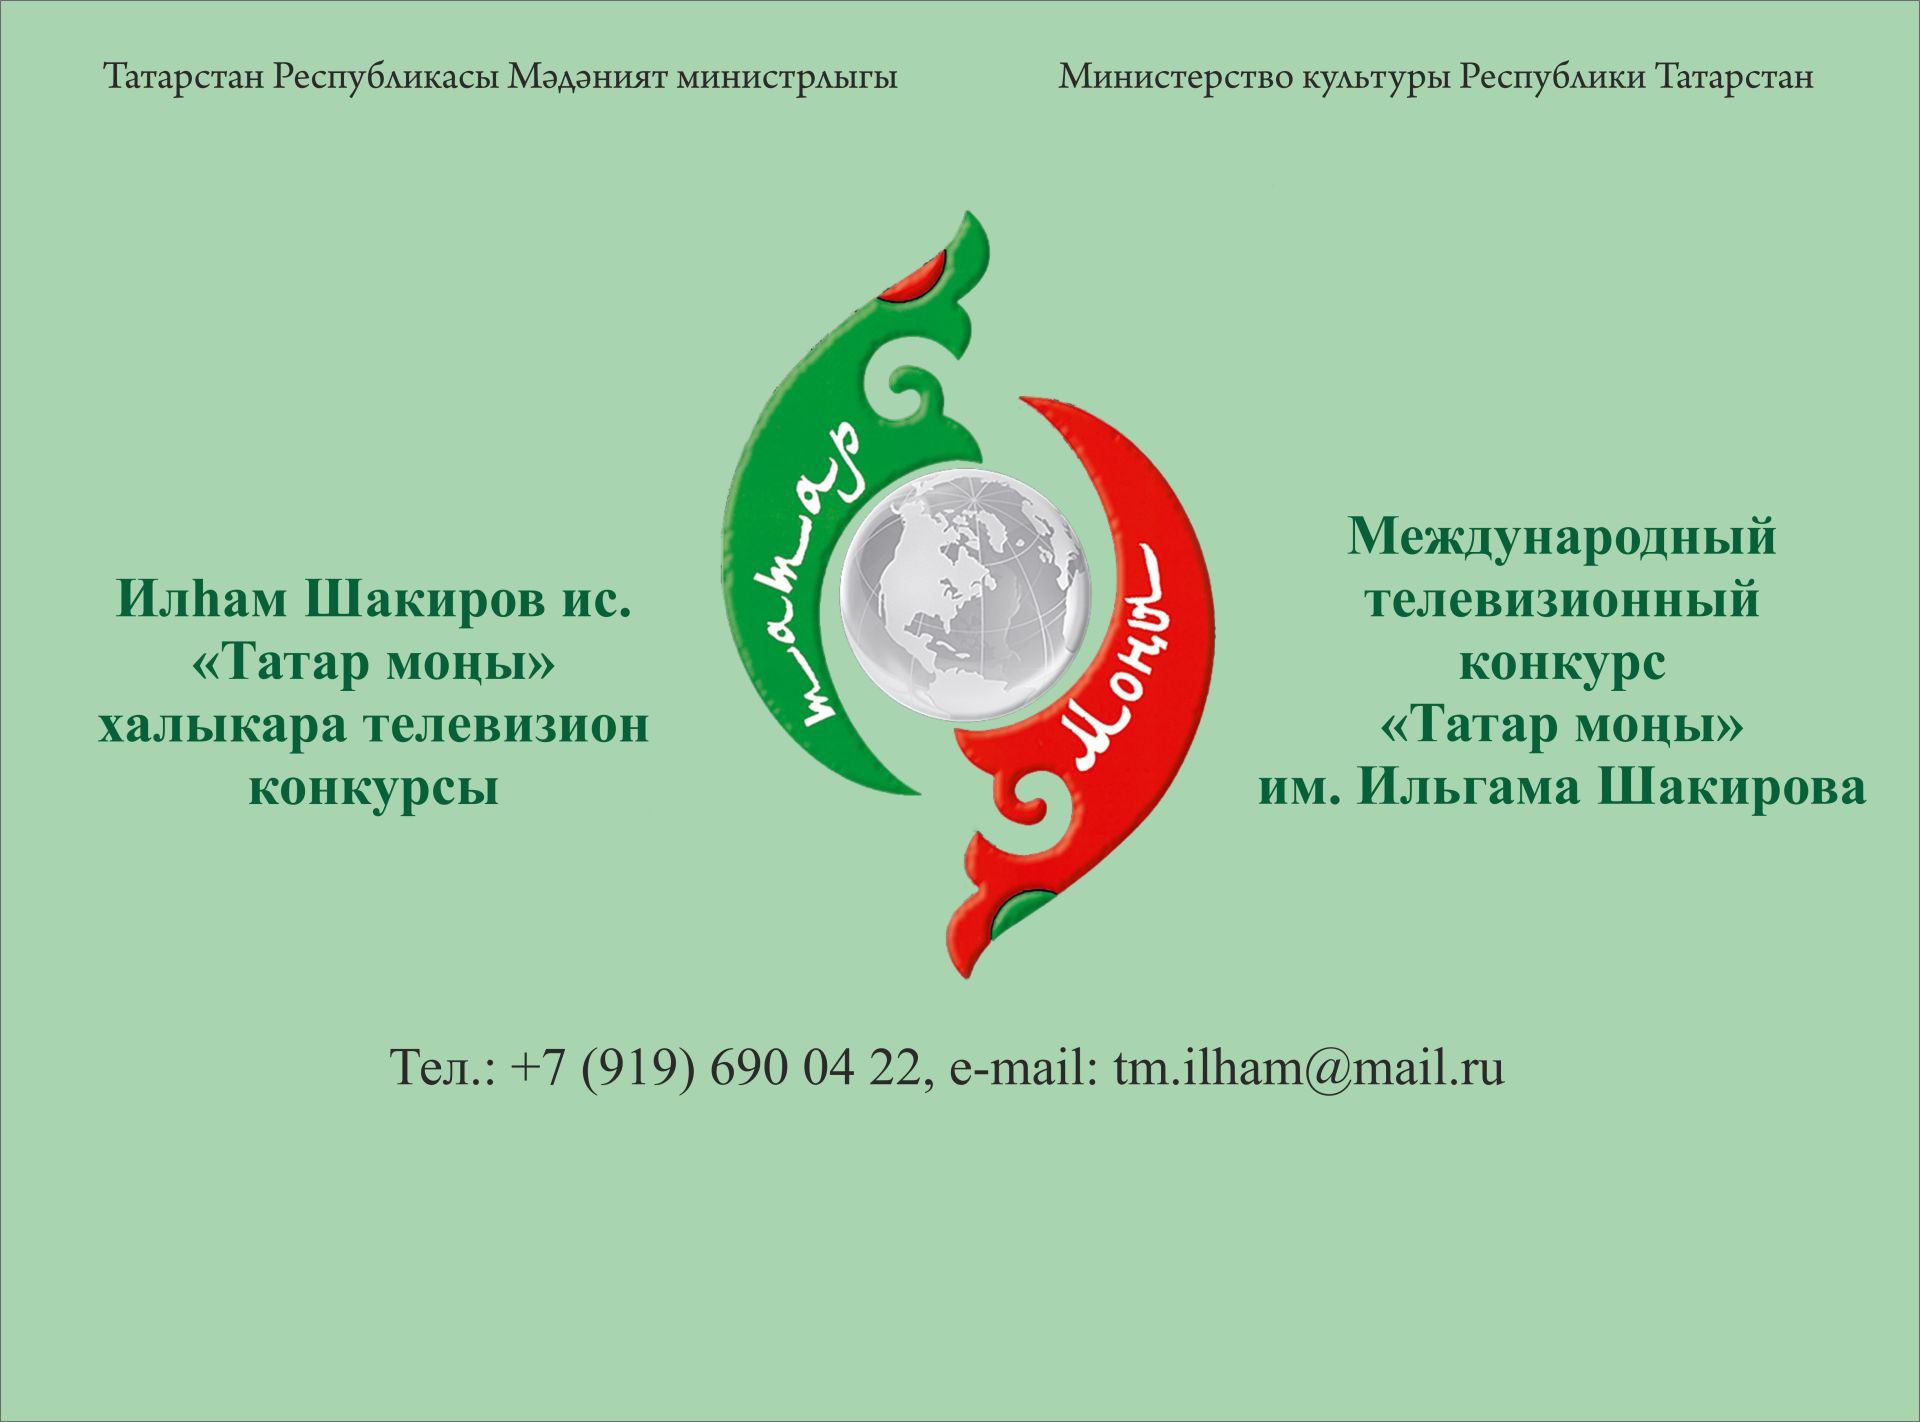 Tatar ru salary